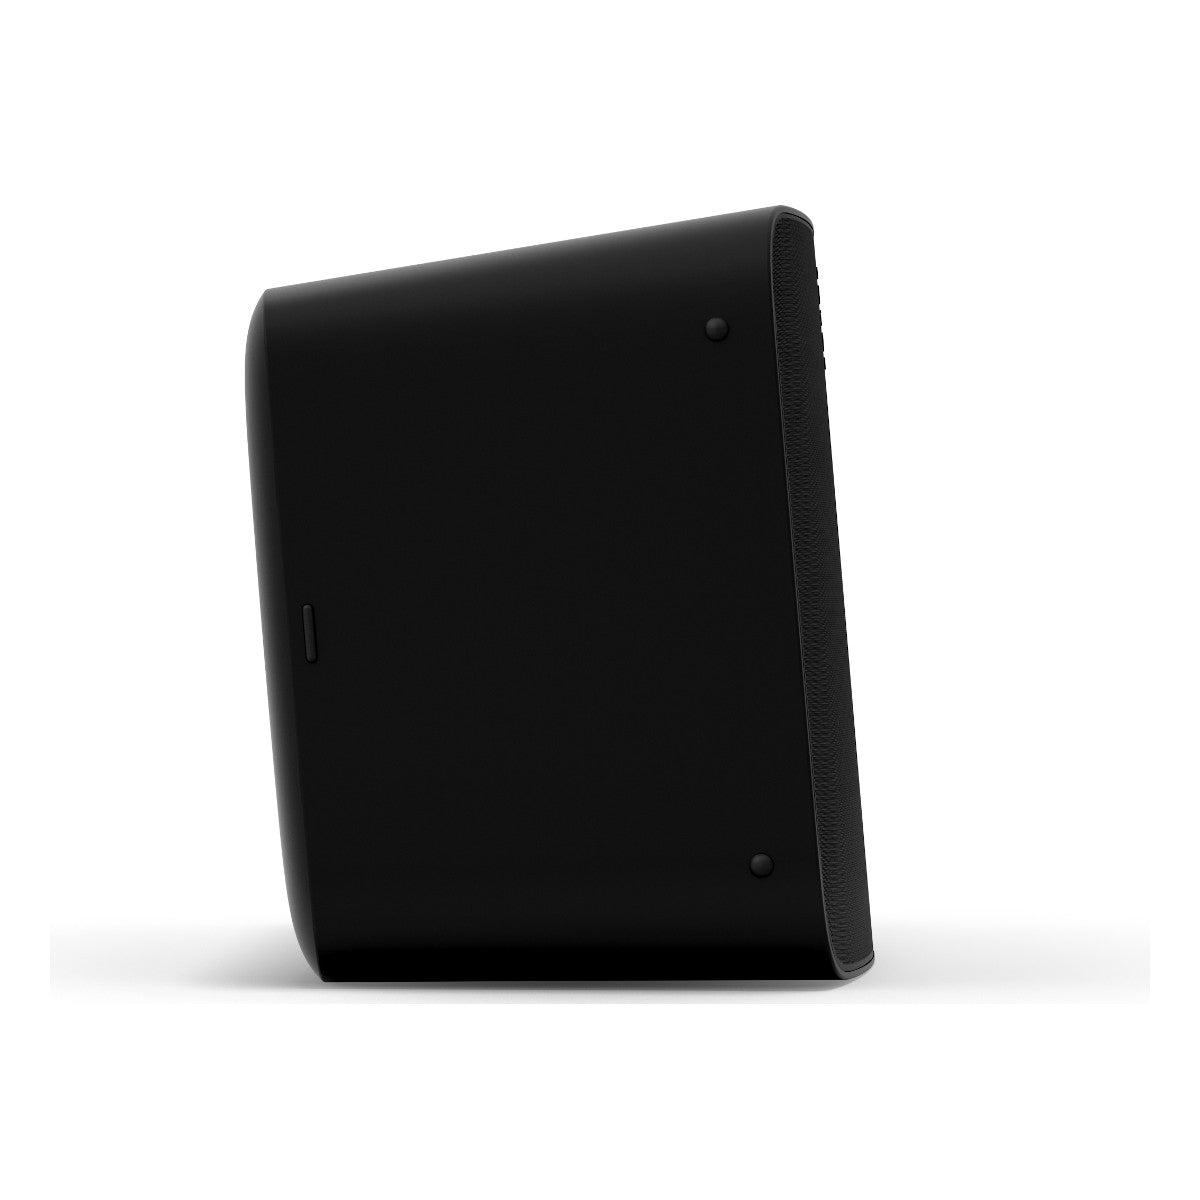 Sonos Five Wireless Speaker with Wall Mount (Black)